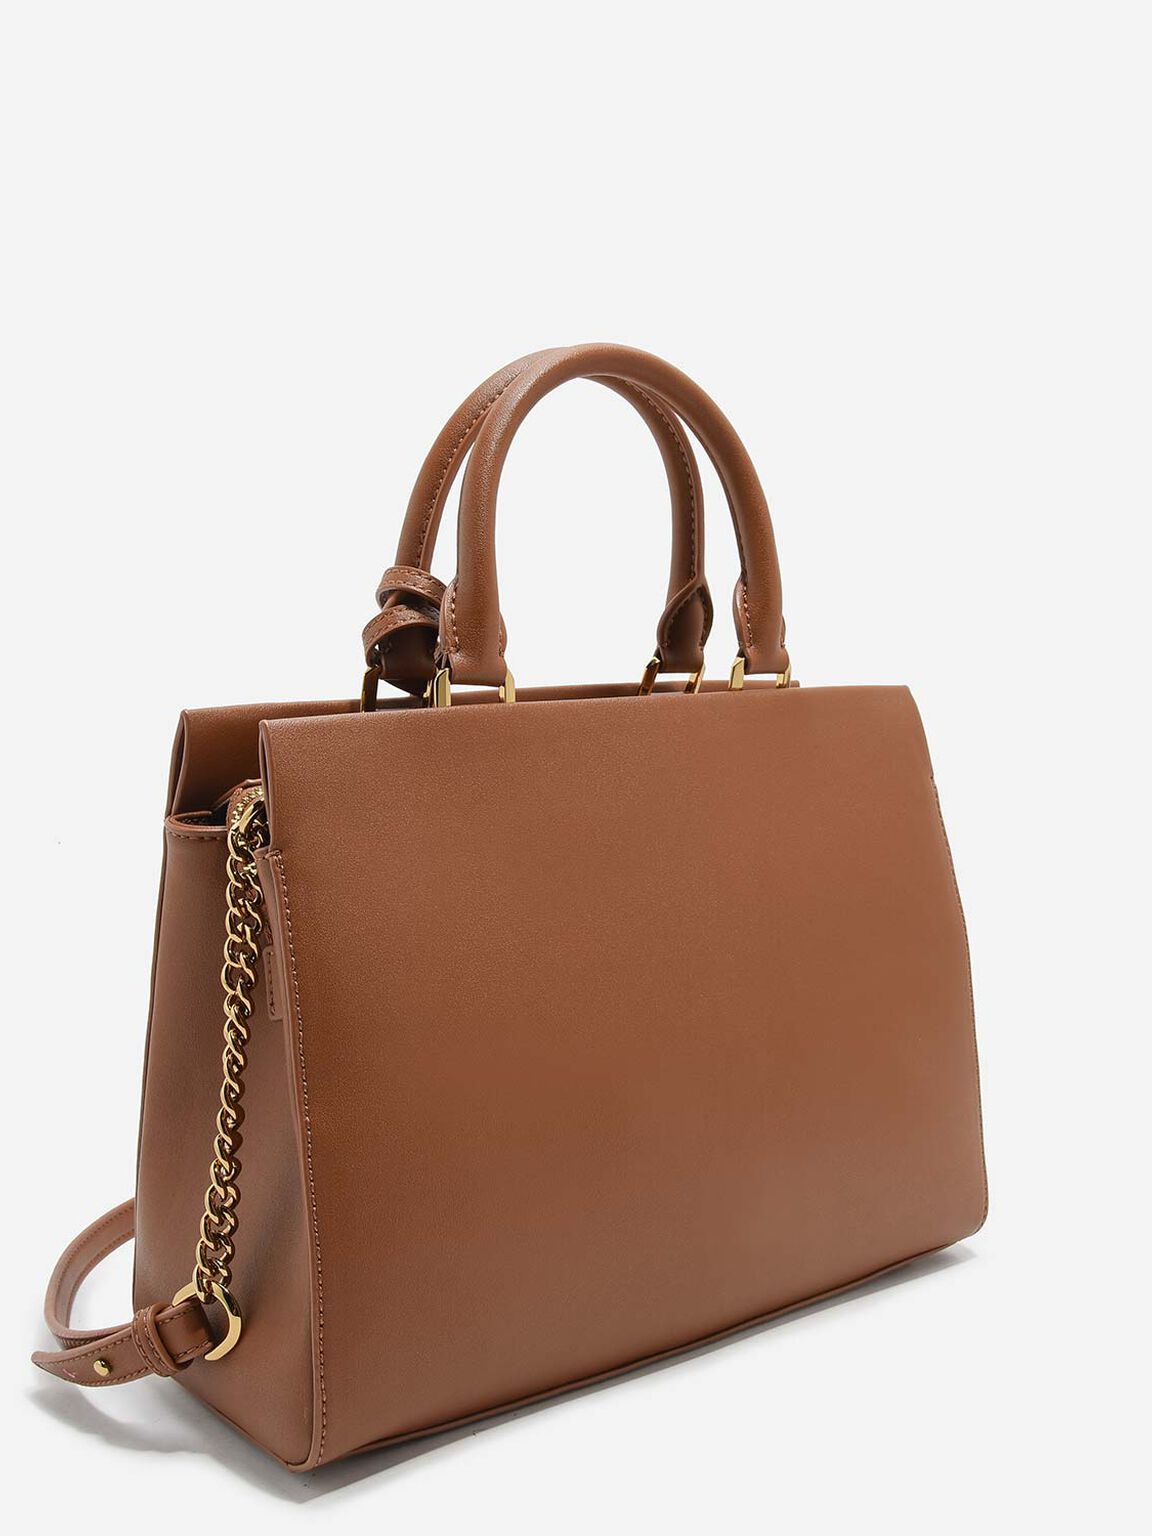 Classic Structured Handbag, Brown, hi-res